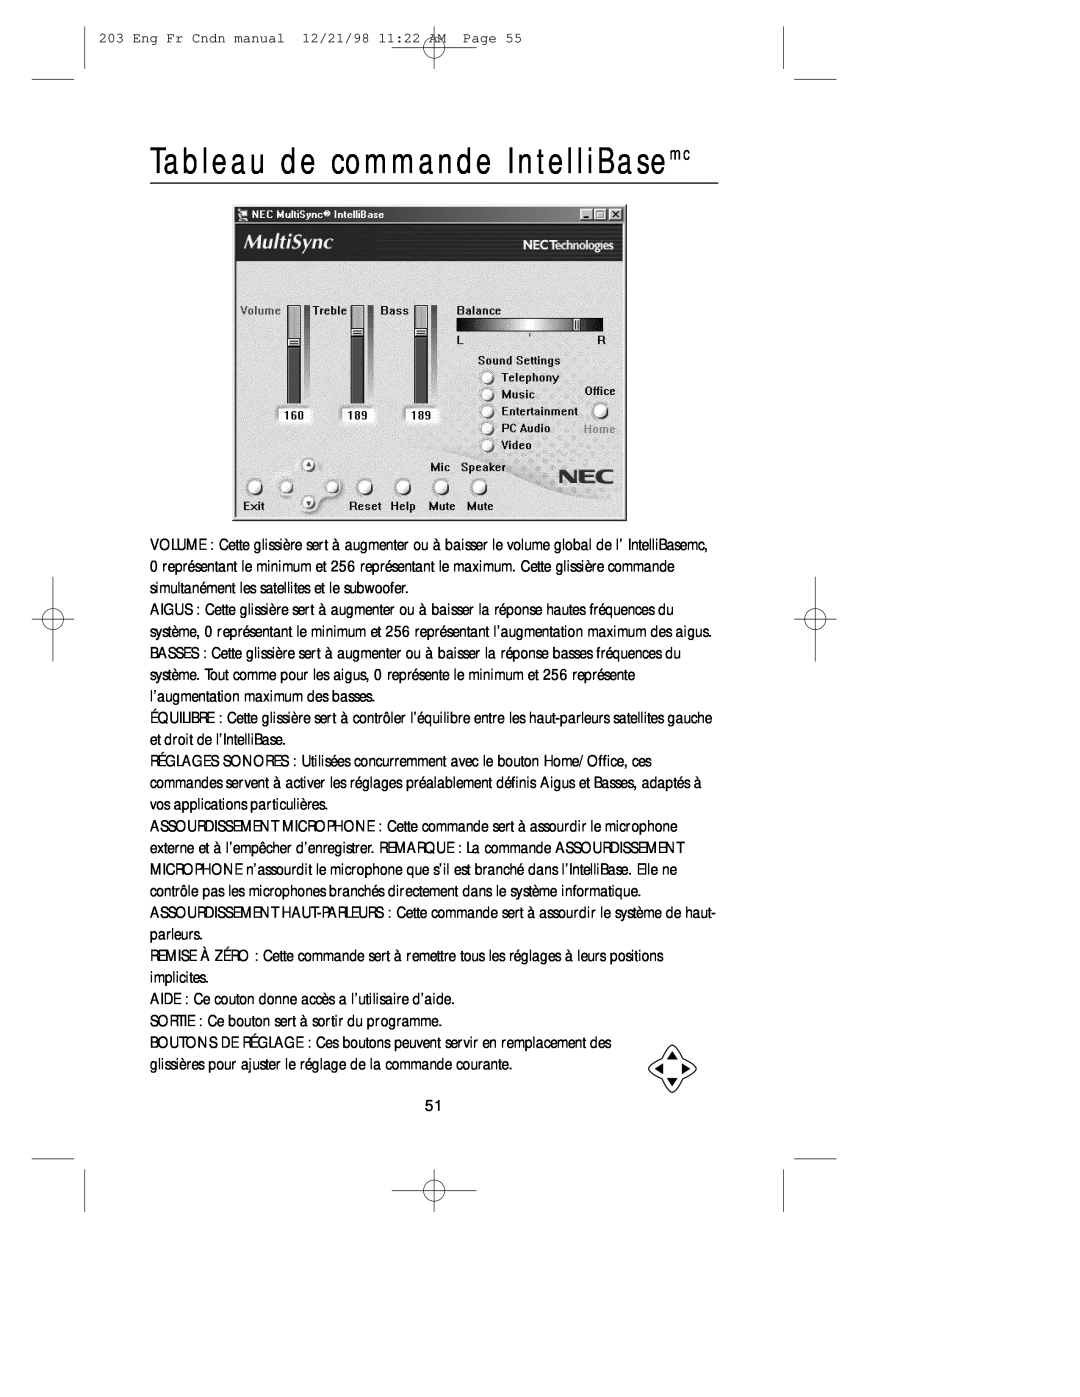 NEC USB user manual Tableau de commande IntelliBasemc 